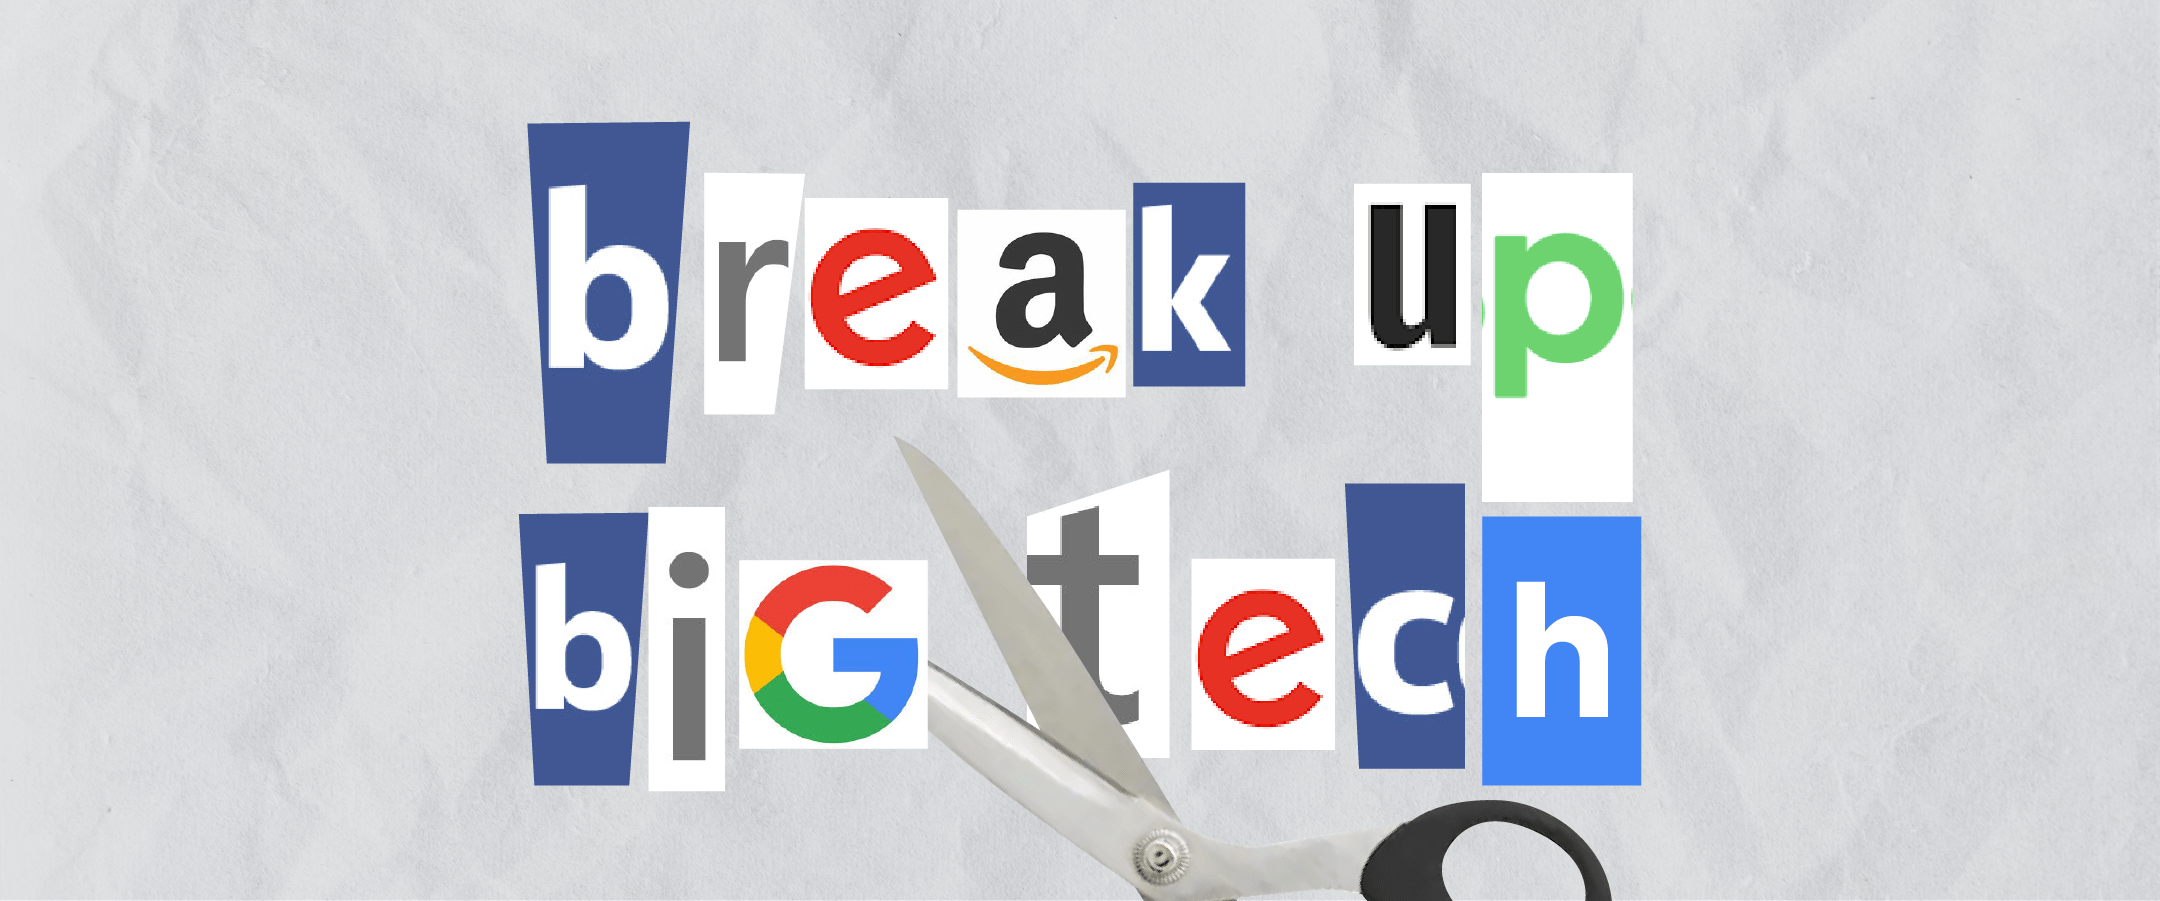 'Break Up Big Tech' : เมื่อนักการเมืองต้องการลดอิทธิพลบริษัทไอทียักษ์ใหญ่